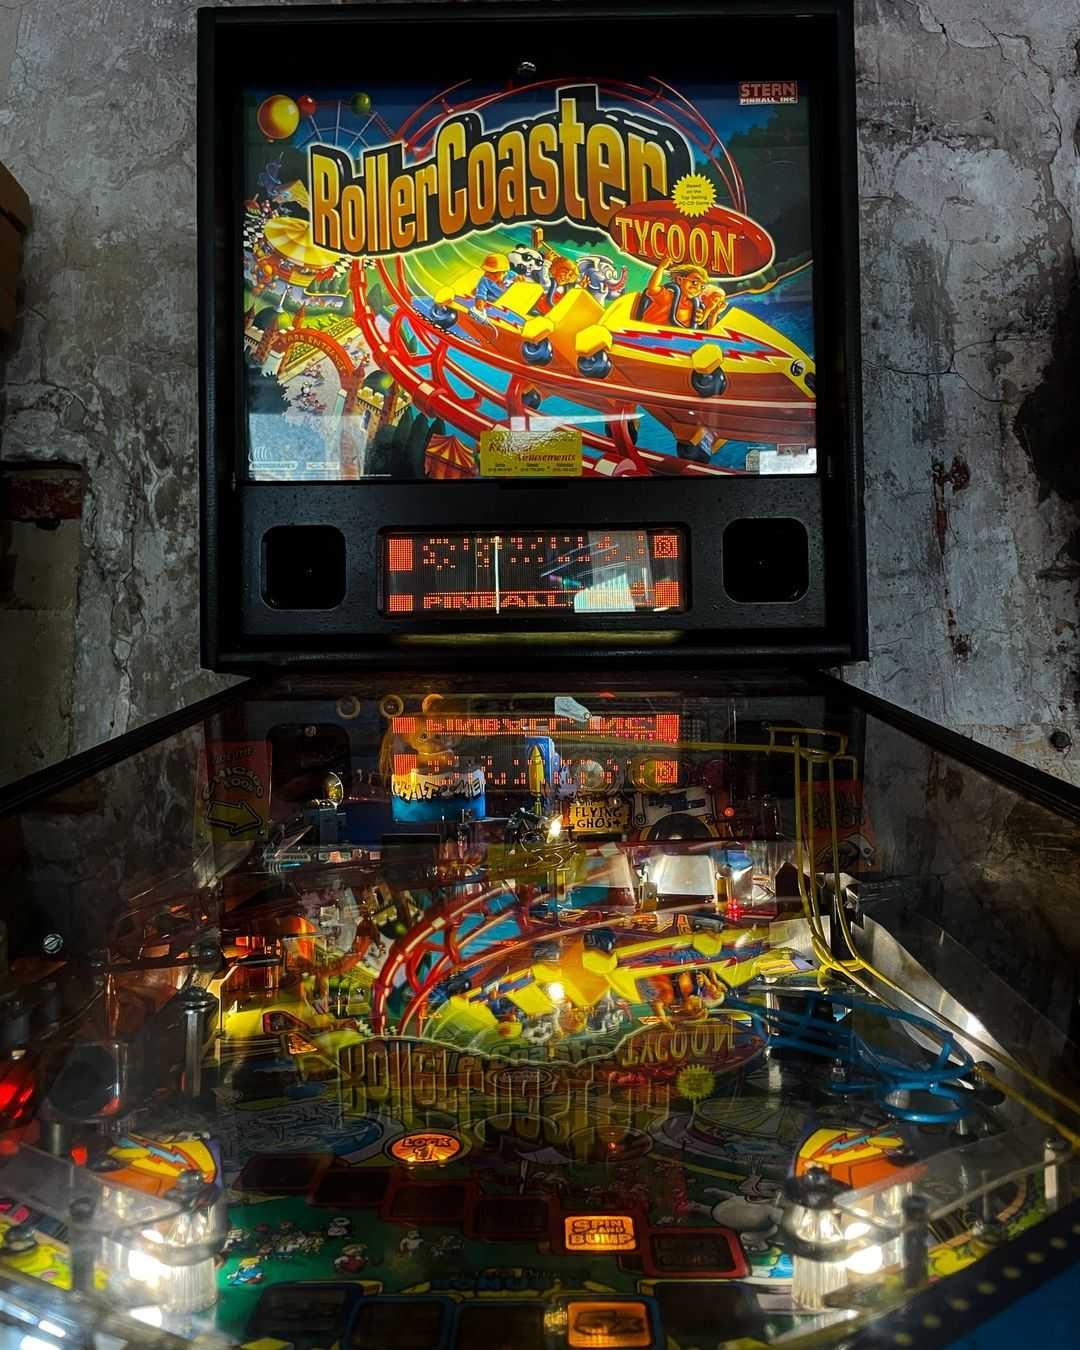 Displays an image showing The Hub of Wilson's pinball machine.